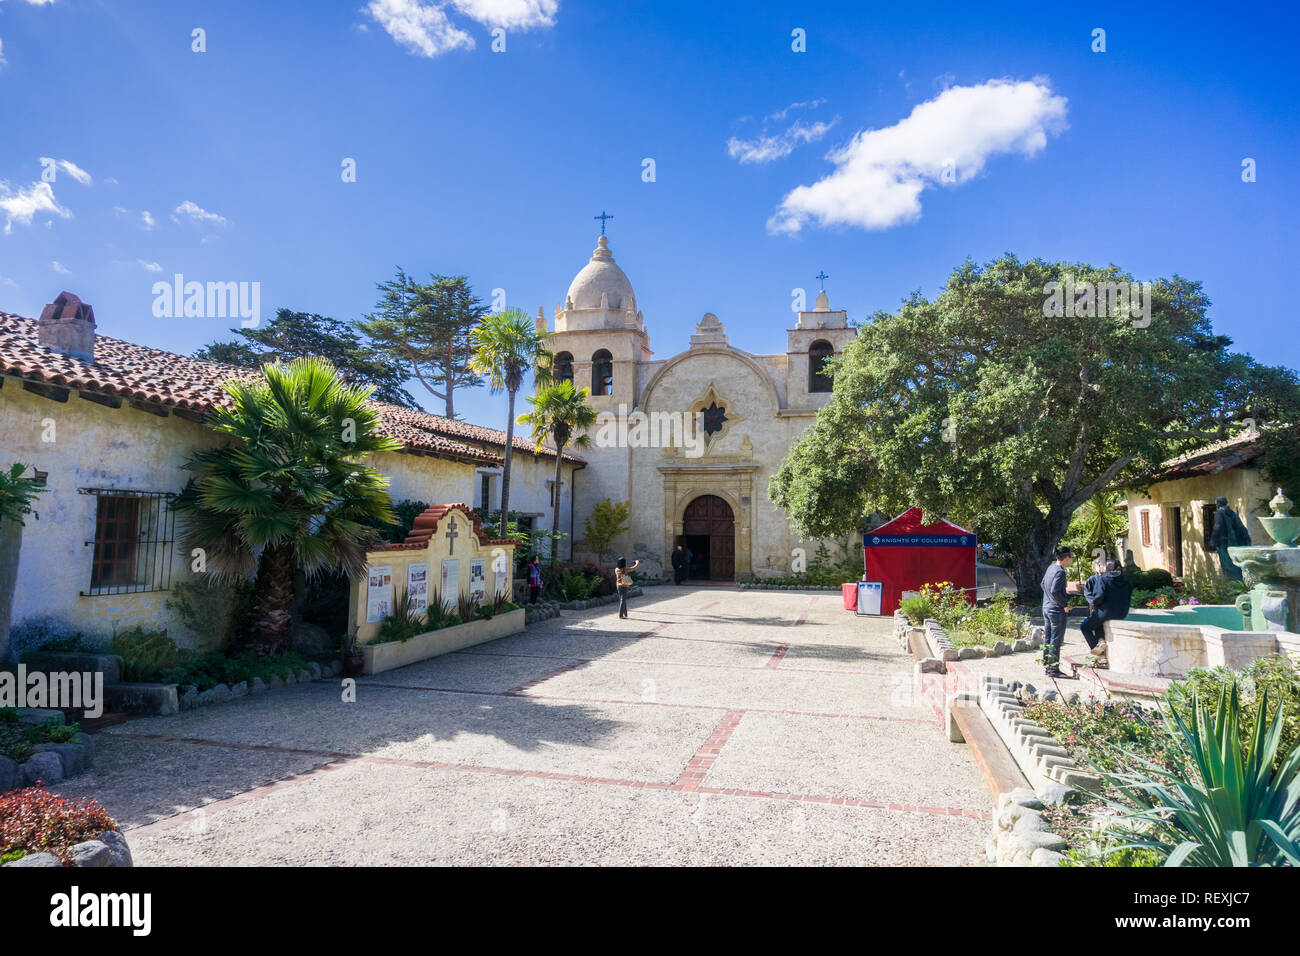 November 5, 2017 Carmel-By-The-Sea/USA - Carmel Mission (Mission San Carlos Borromeo del rio Carmelo) courtyard and main building, a restored historic Stock Photo